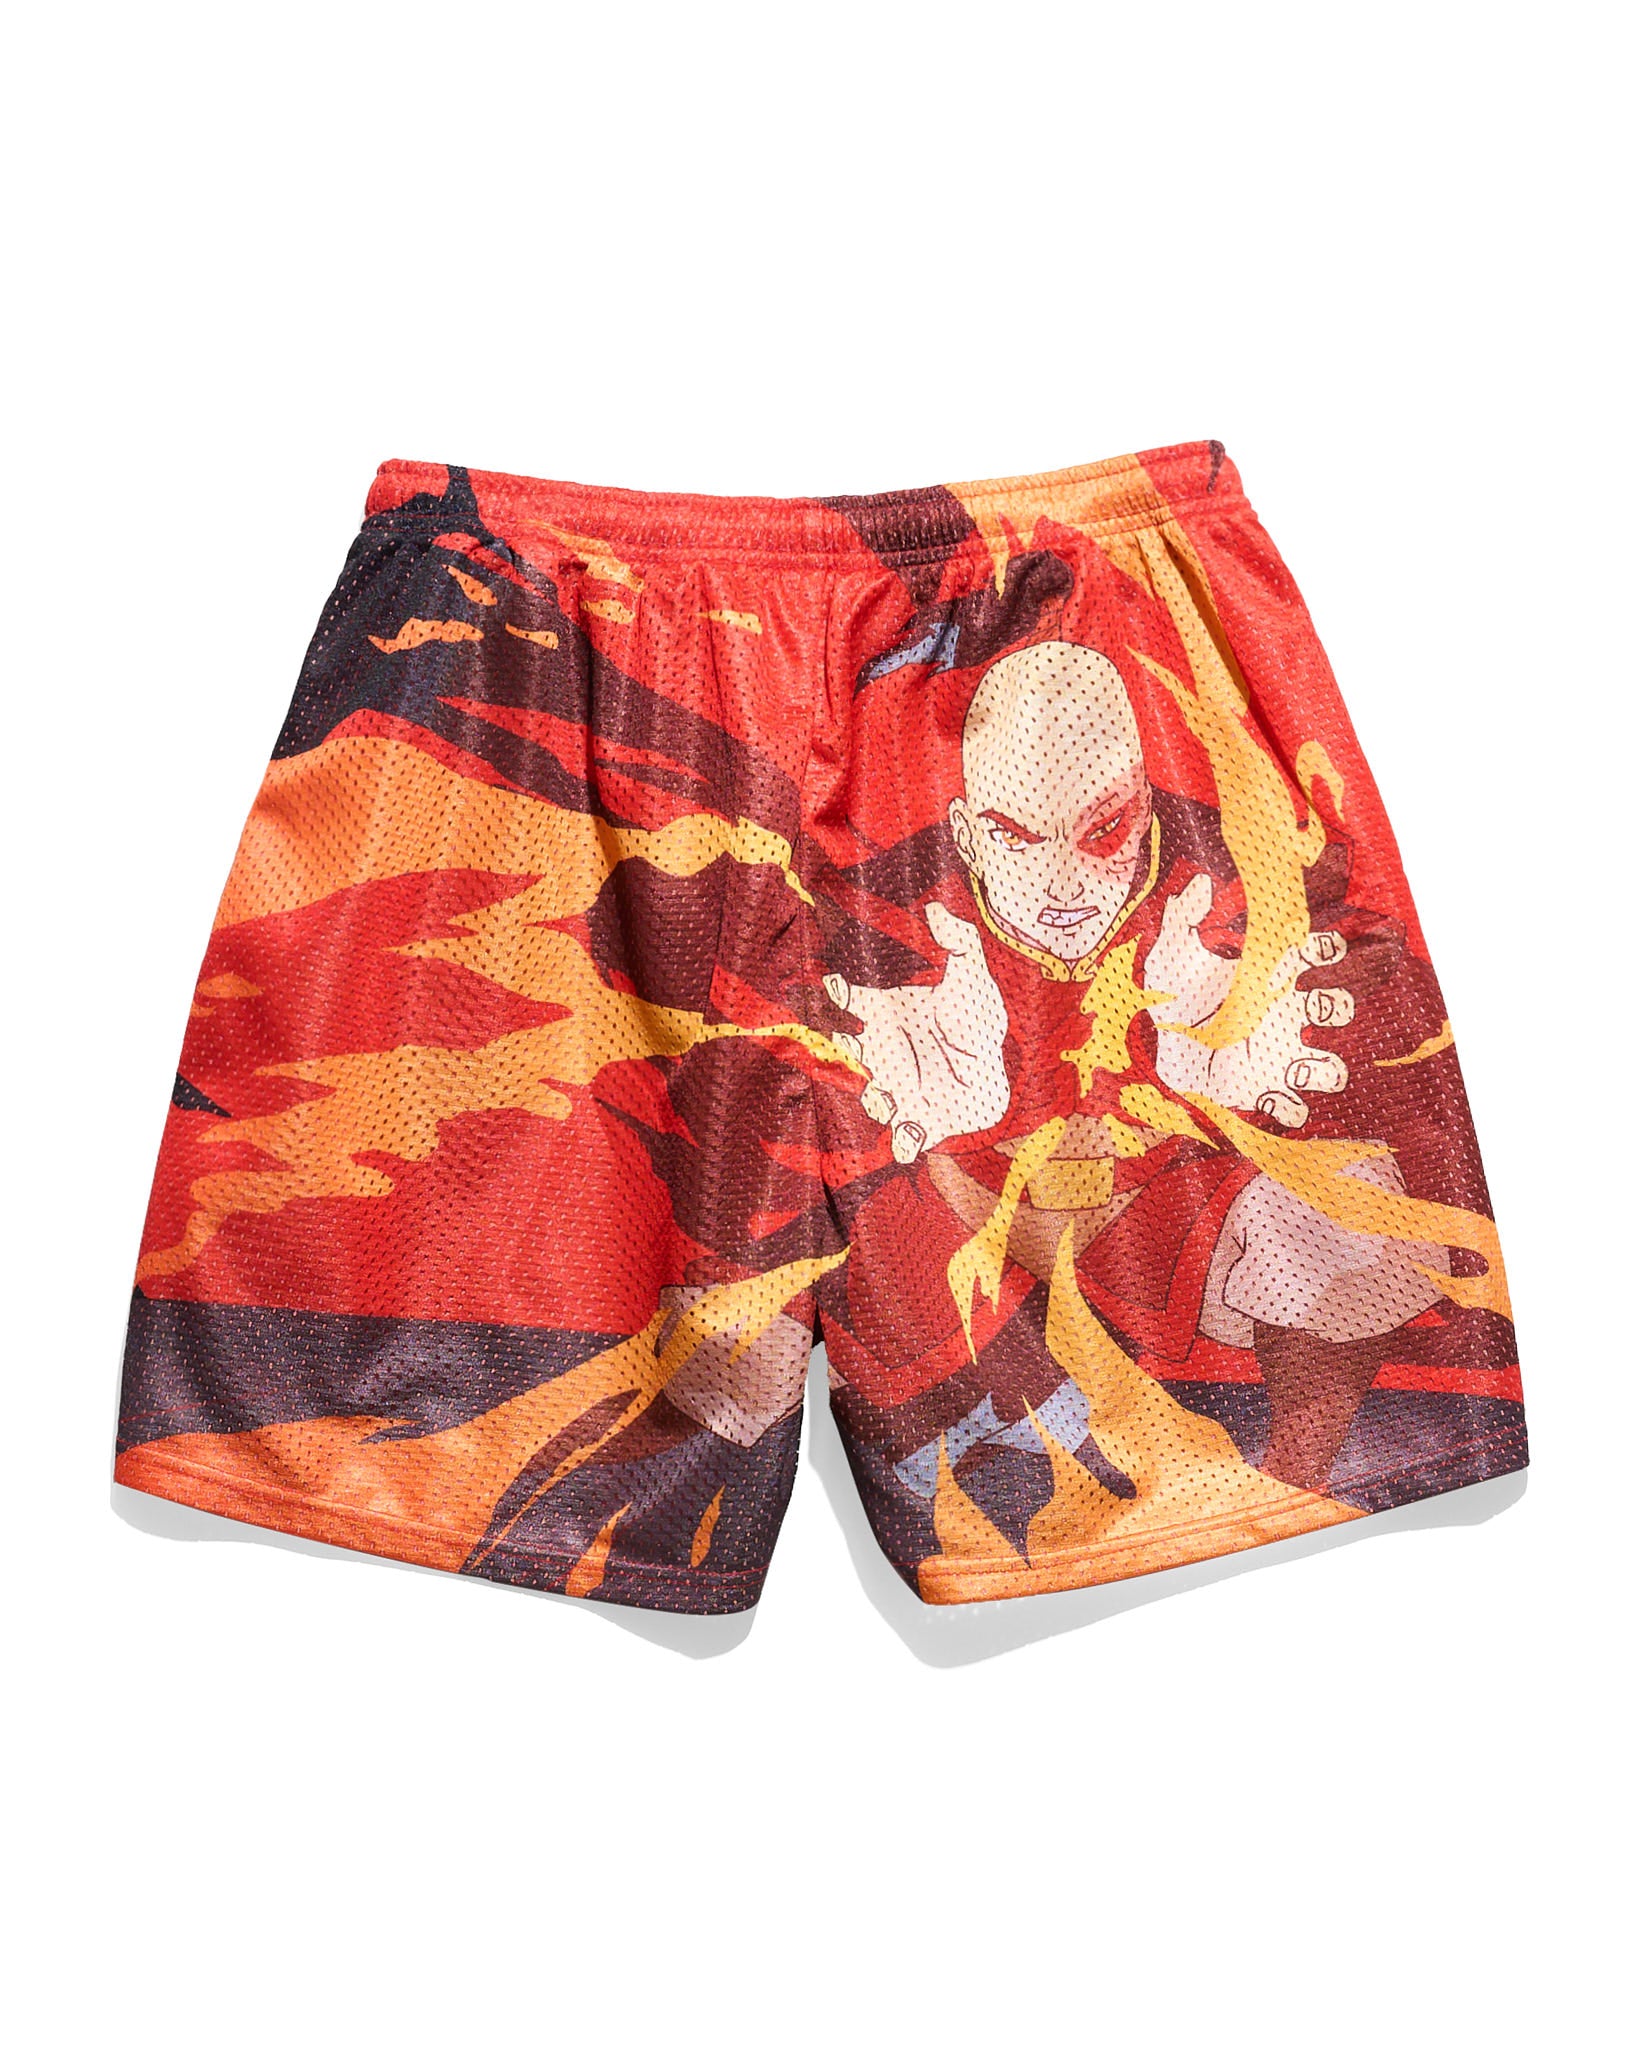 Zuko Avatar Retro Shorts